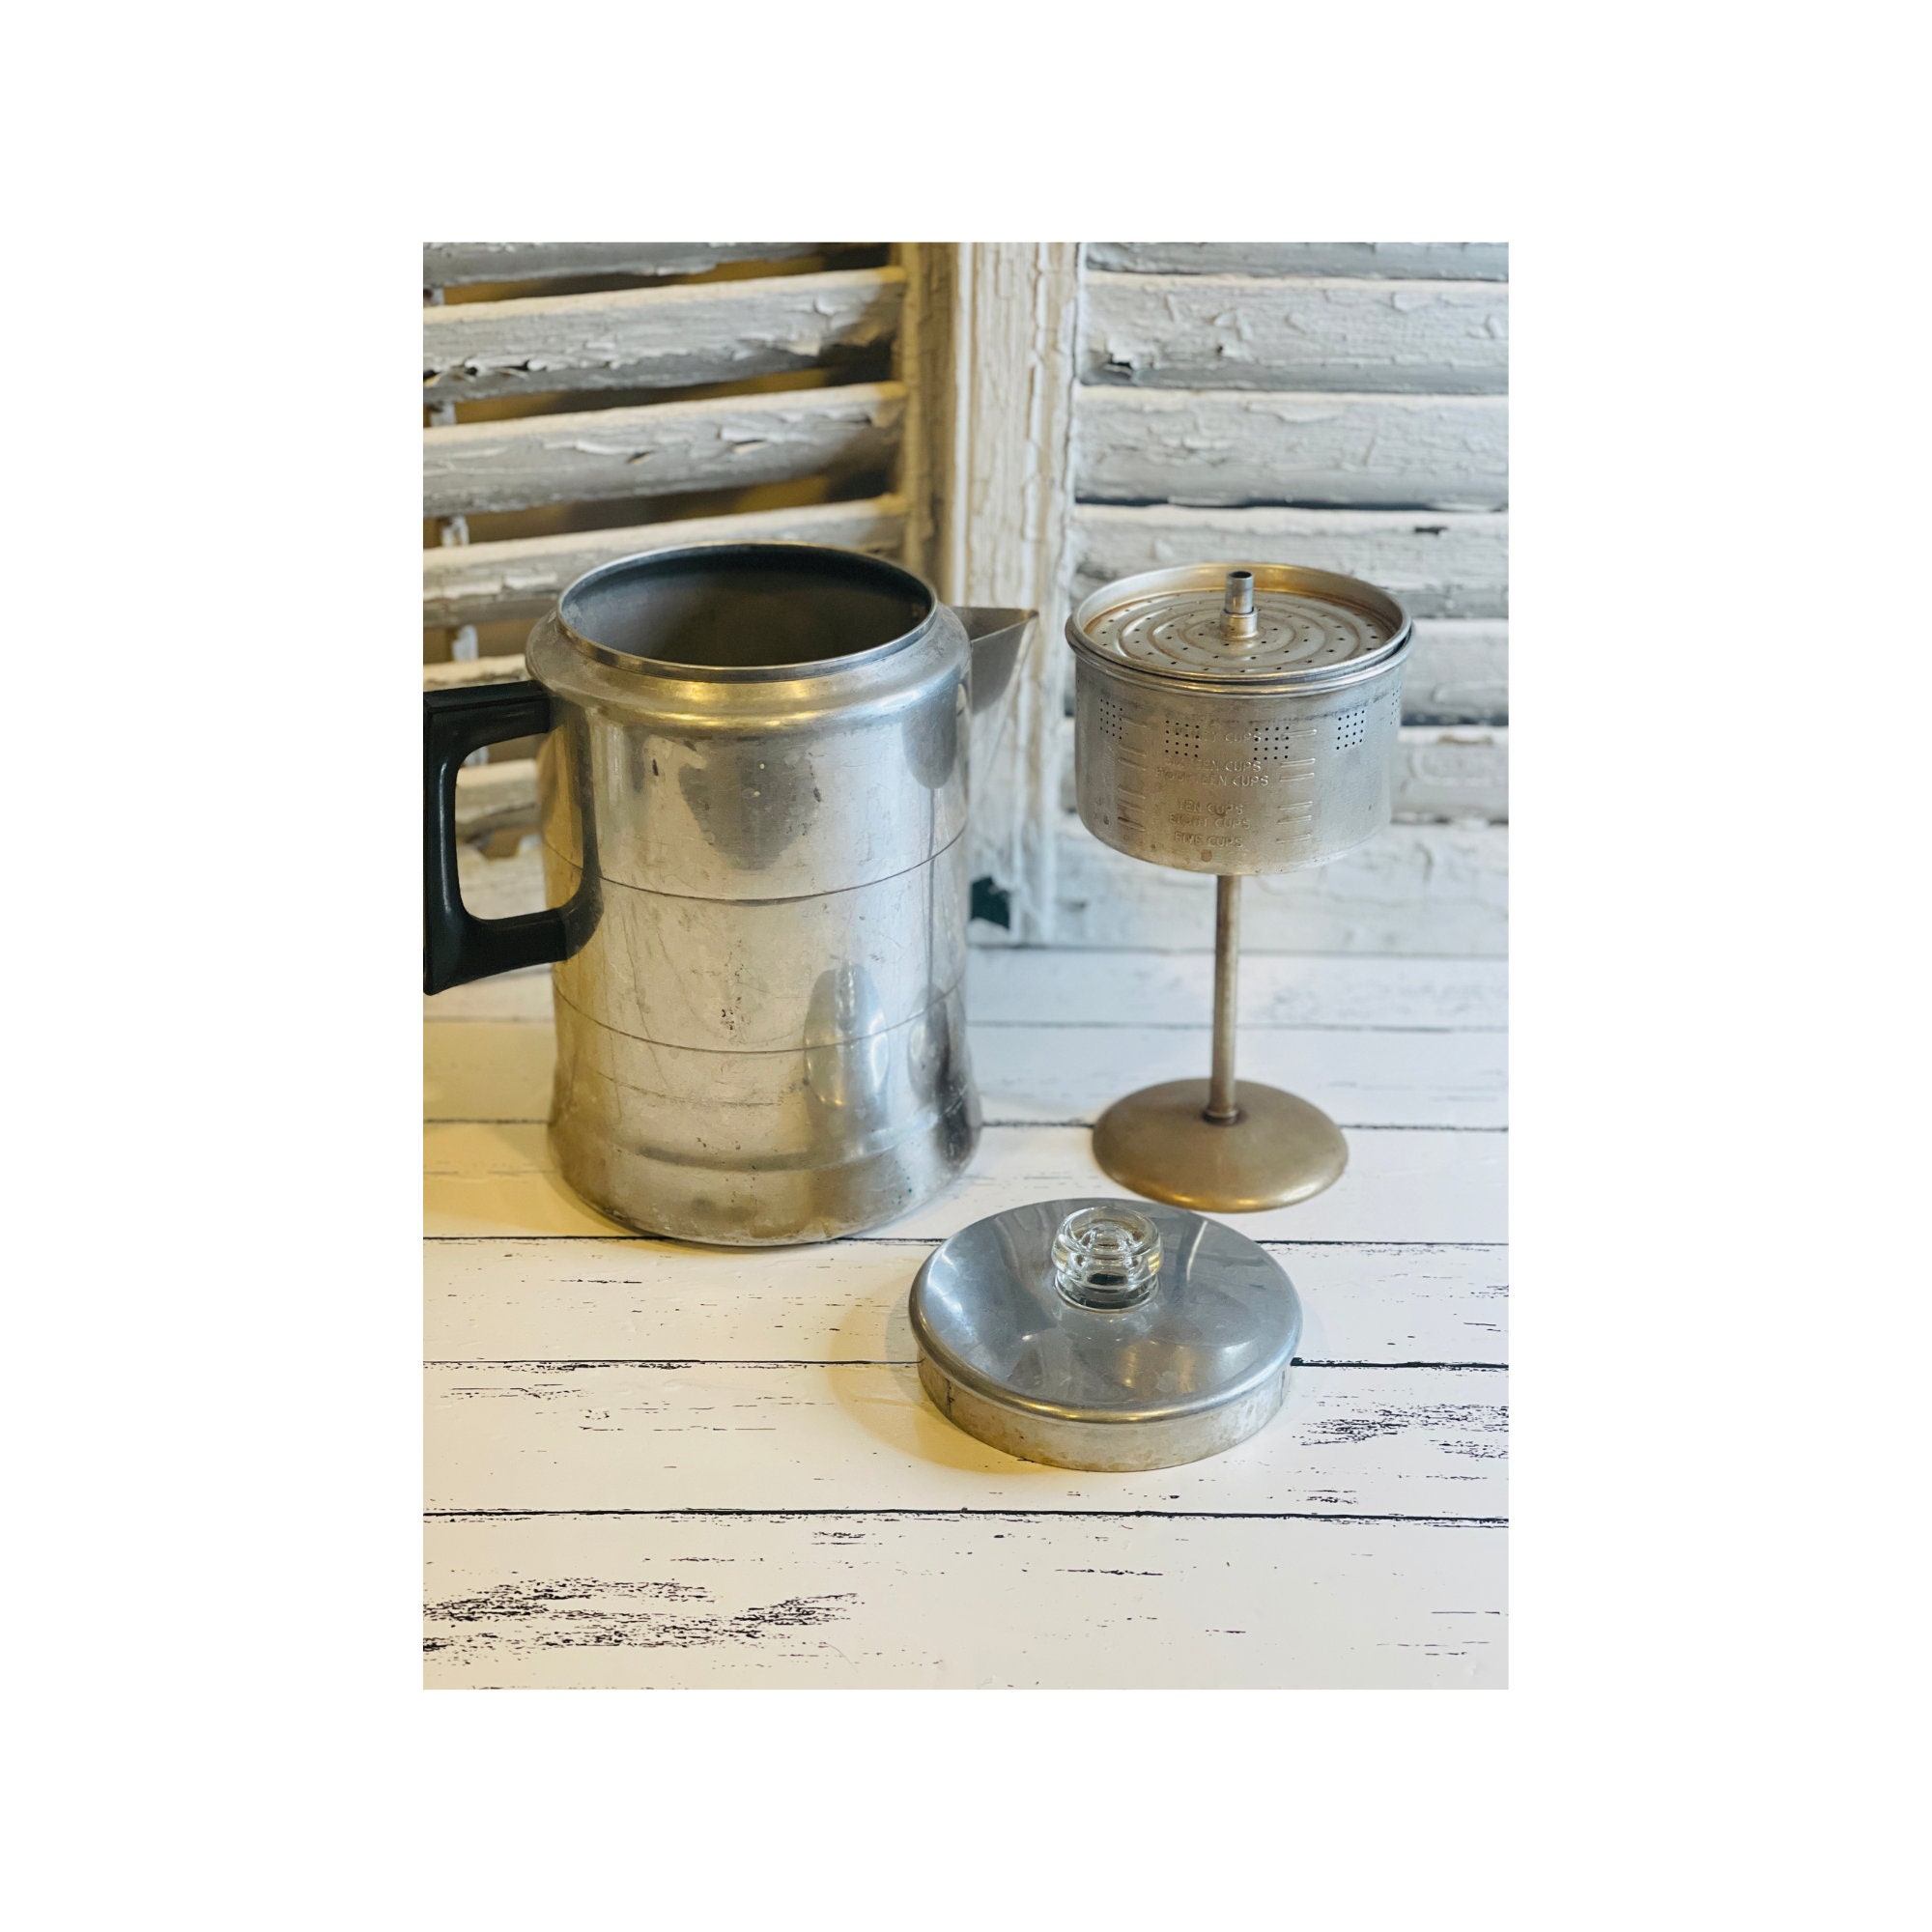 Vintage 1960s Comet Coffee Pot Percolator - Aluminum 9 Cup Capacity - – In  The Vintage Kitchen Shop